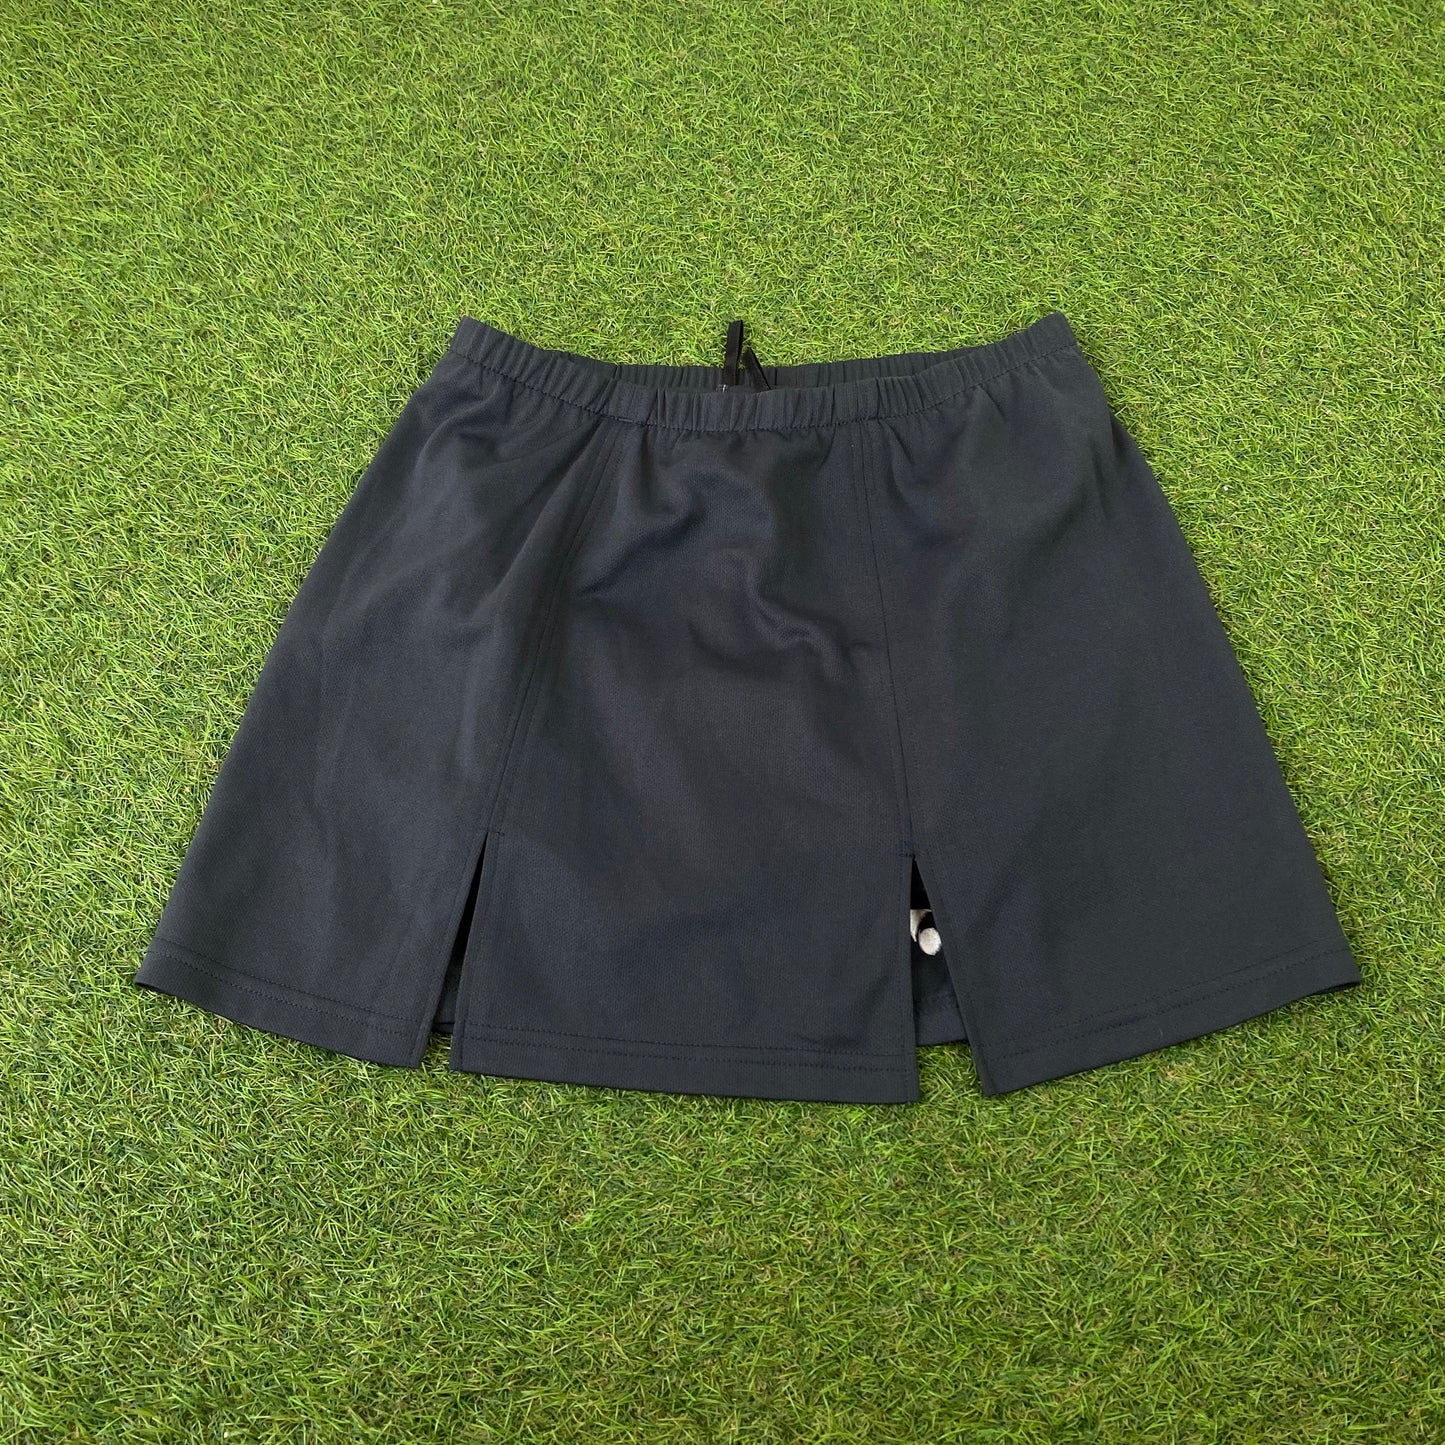 Retro Yonex Tennis Skirt Skort Grey XS/S UK6